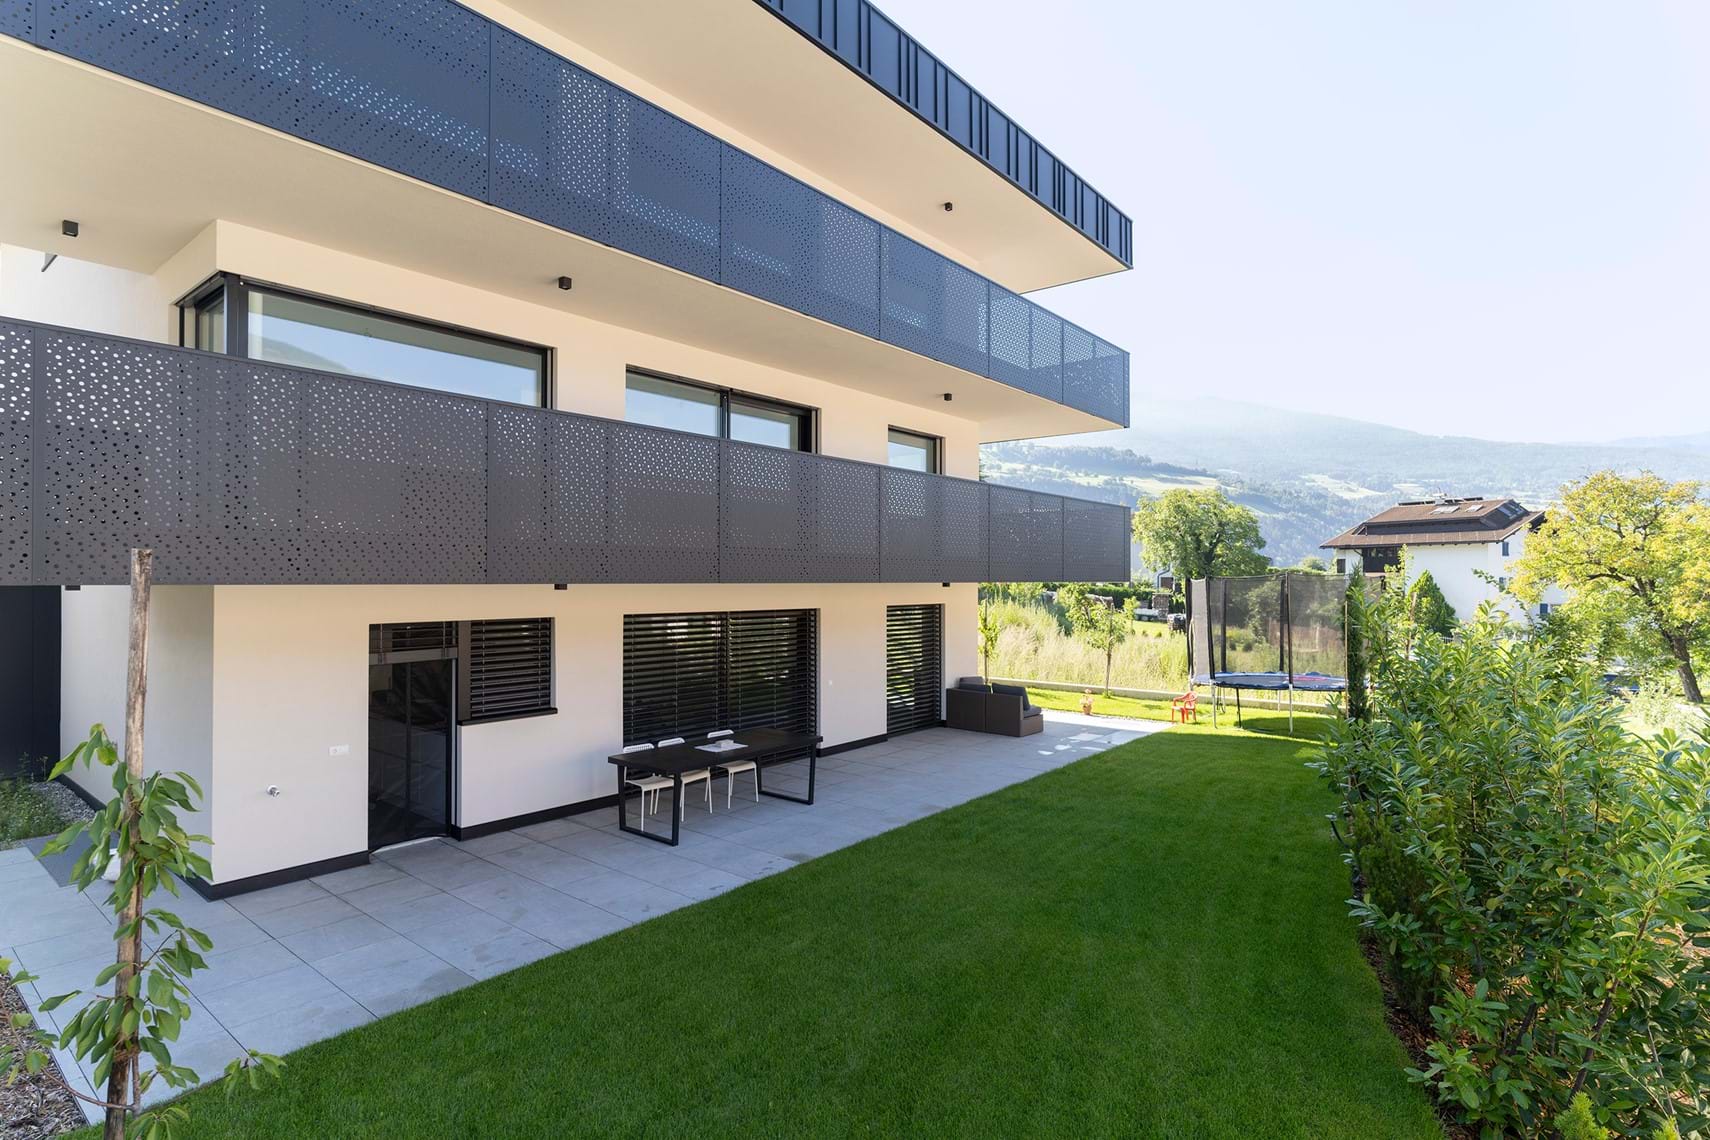 Casa residenziale, Elvas / Bressanone (BZ)